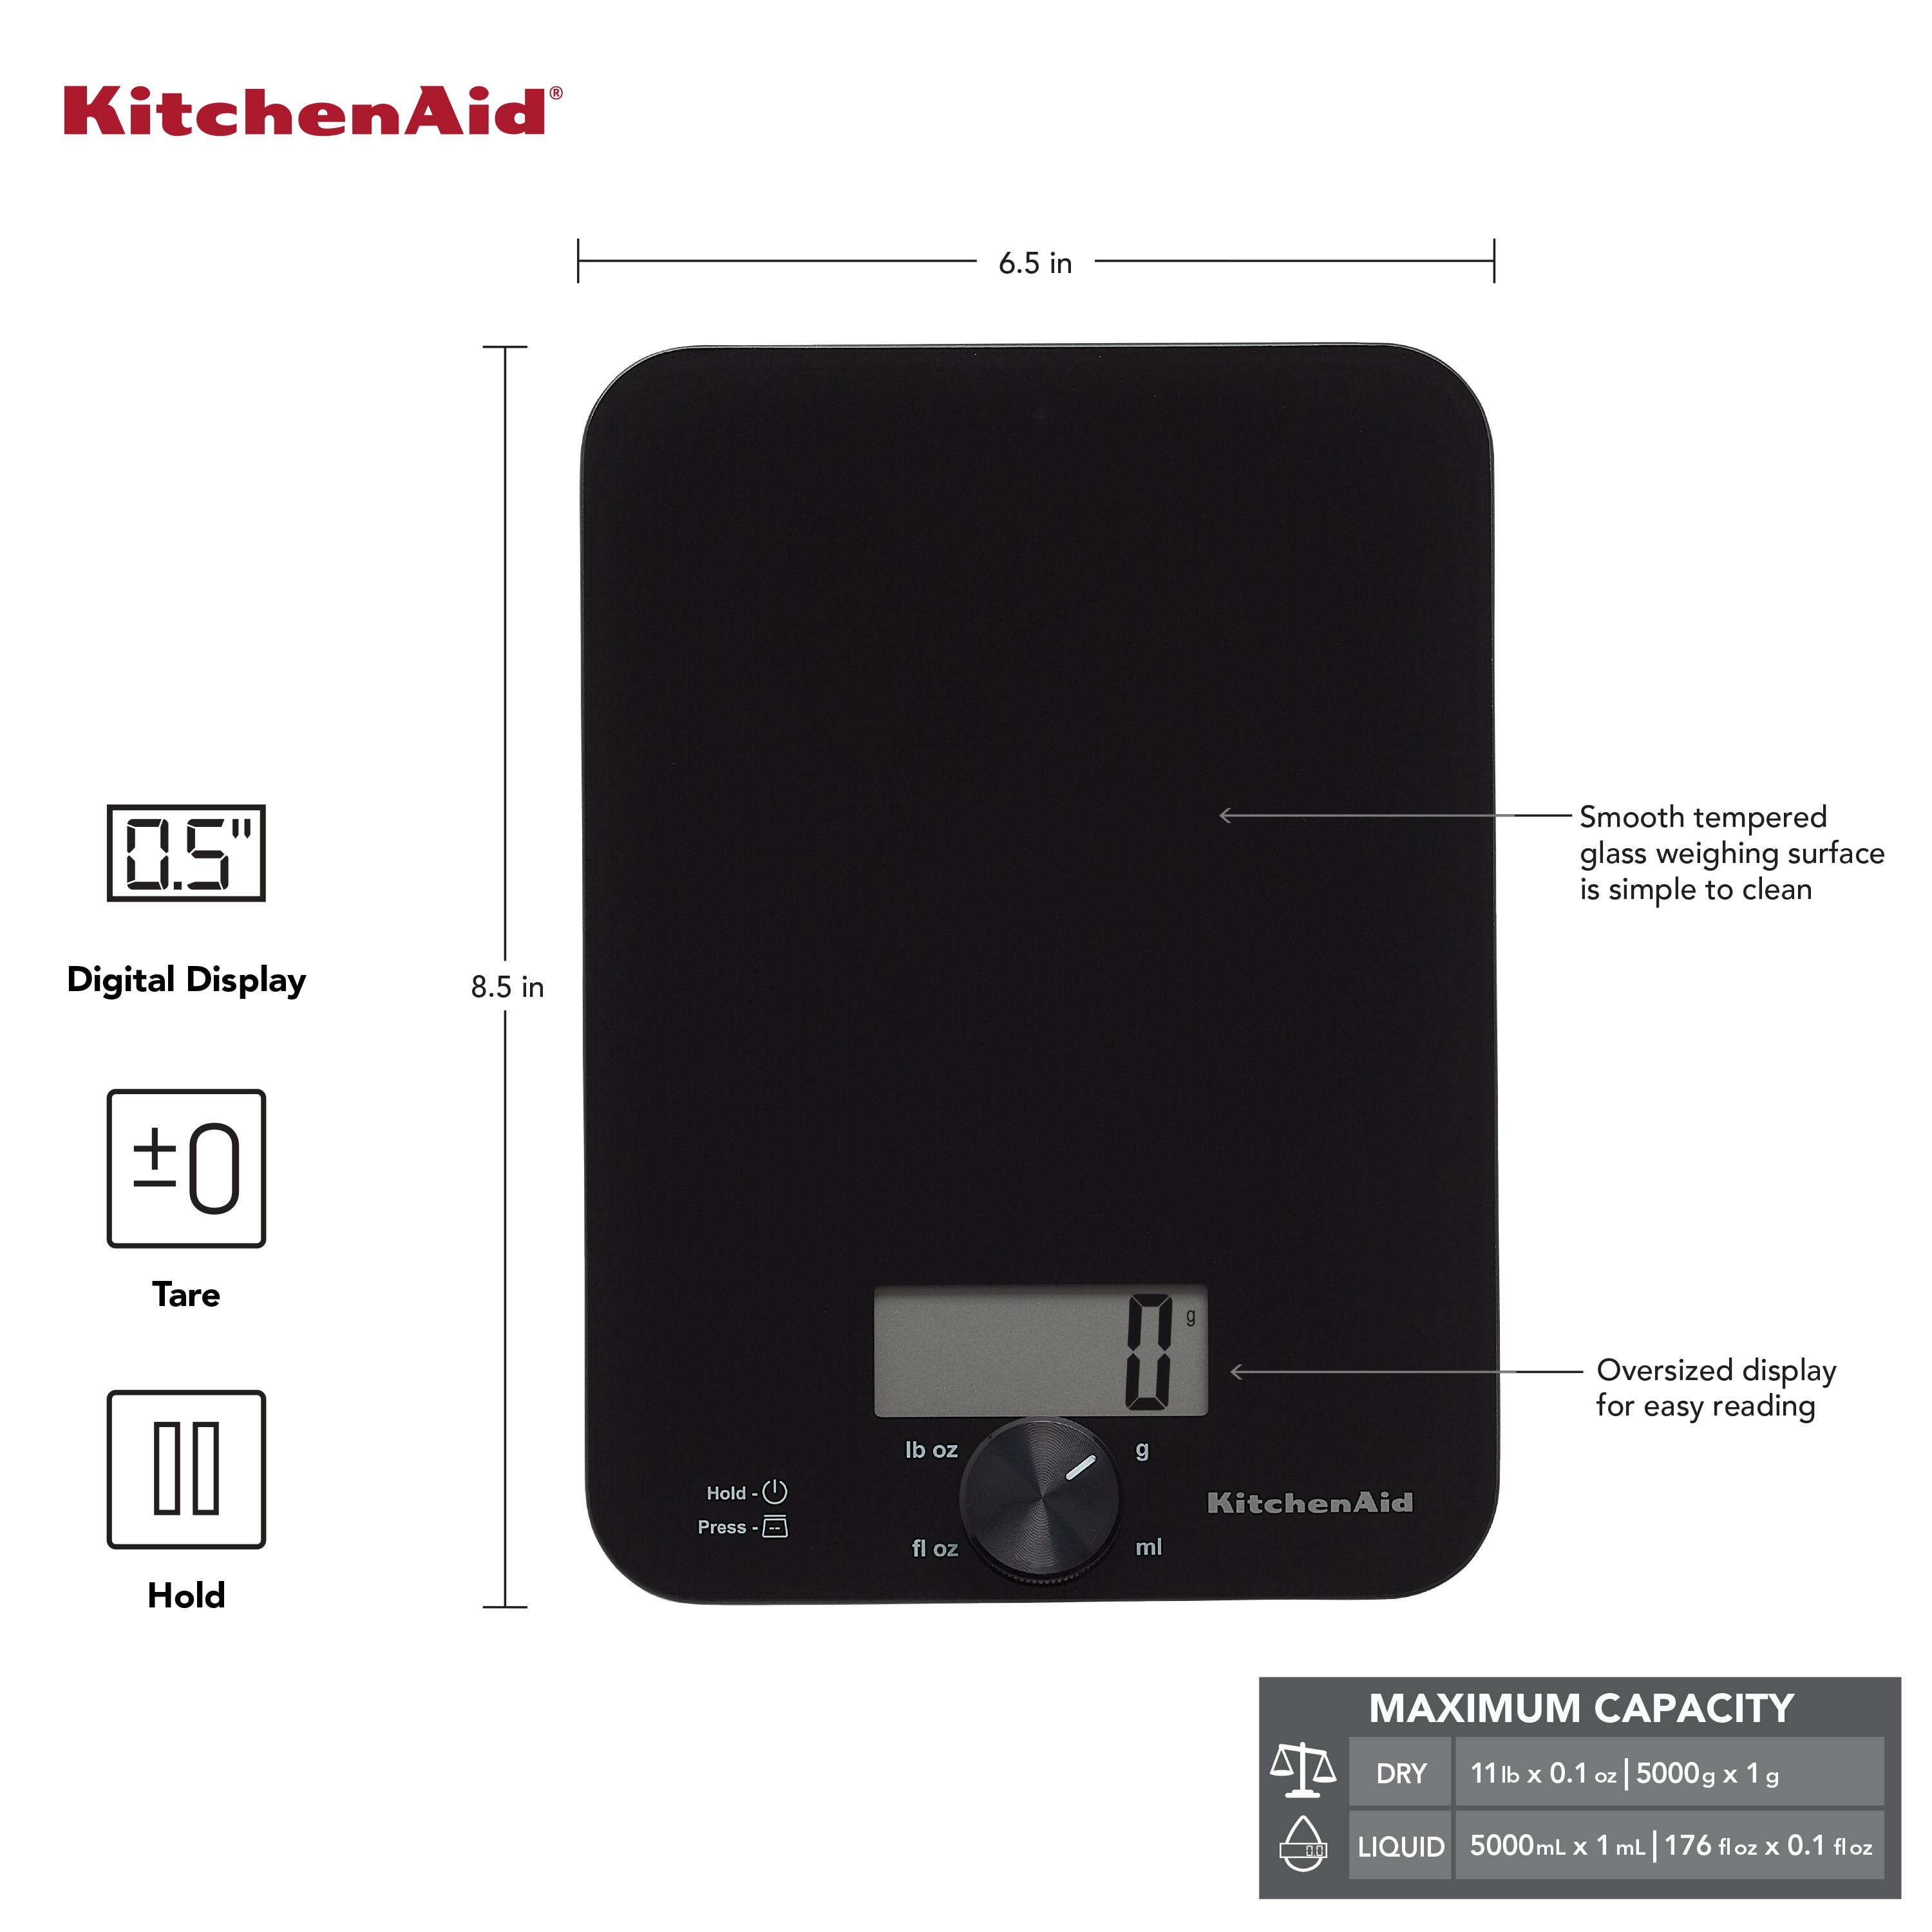 KitchenAid 11lb Digital Glass Top Kitchen and Food Scale